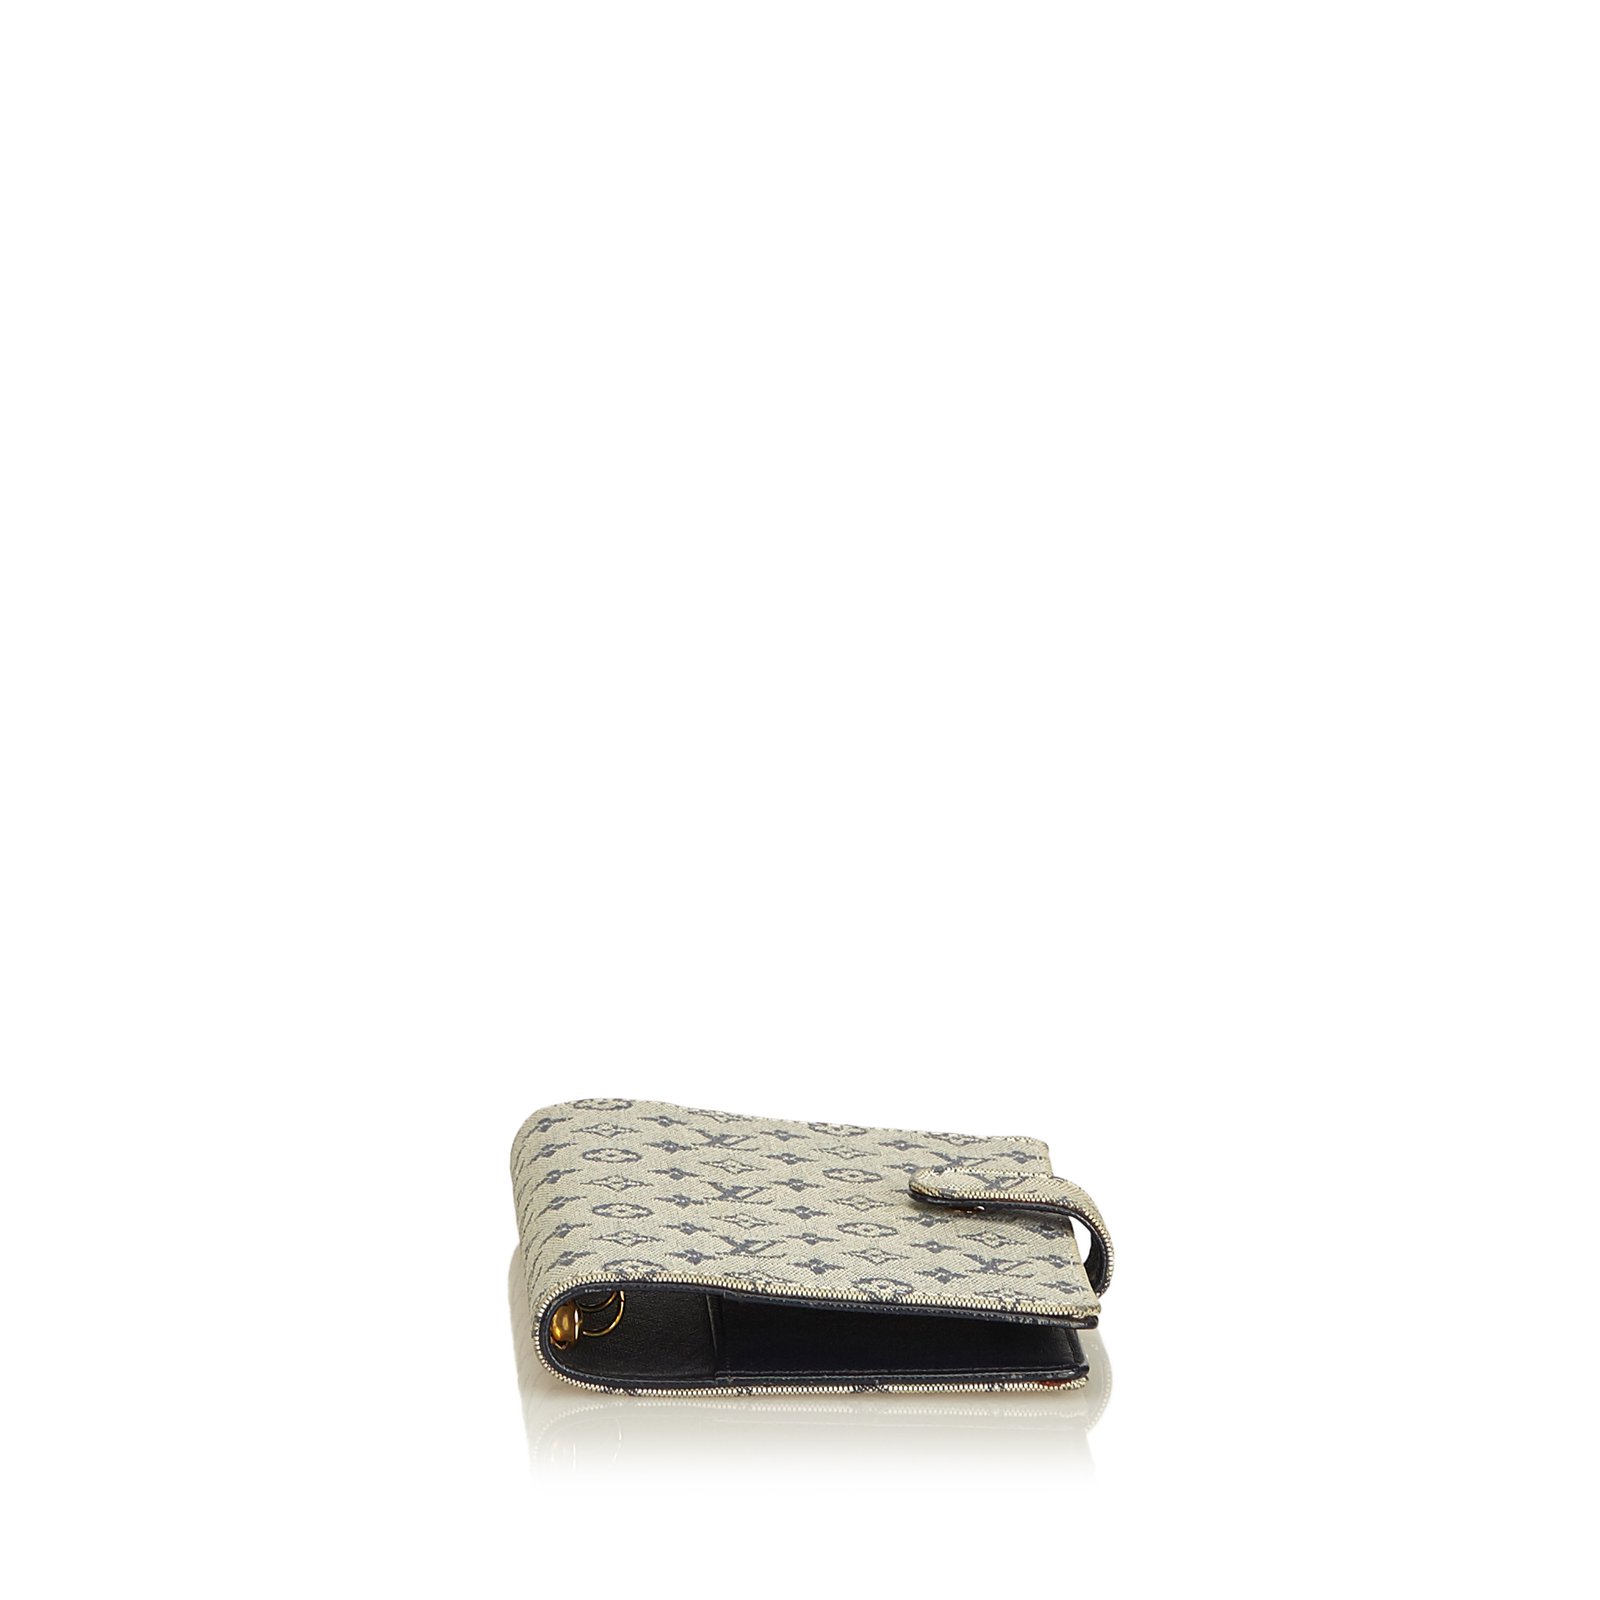 Louis Vuitton Monogram Mini Lin Small Ring